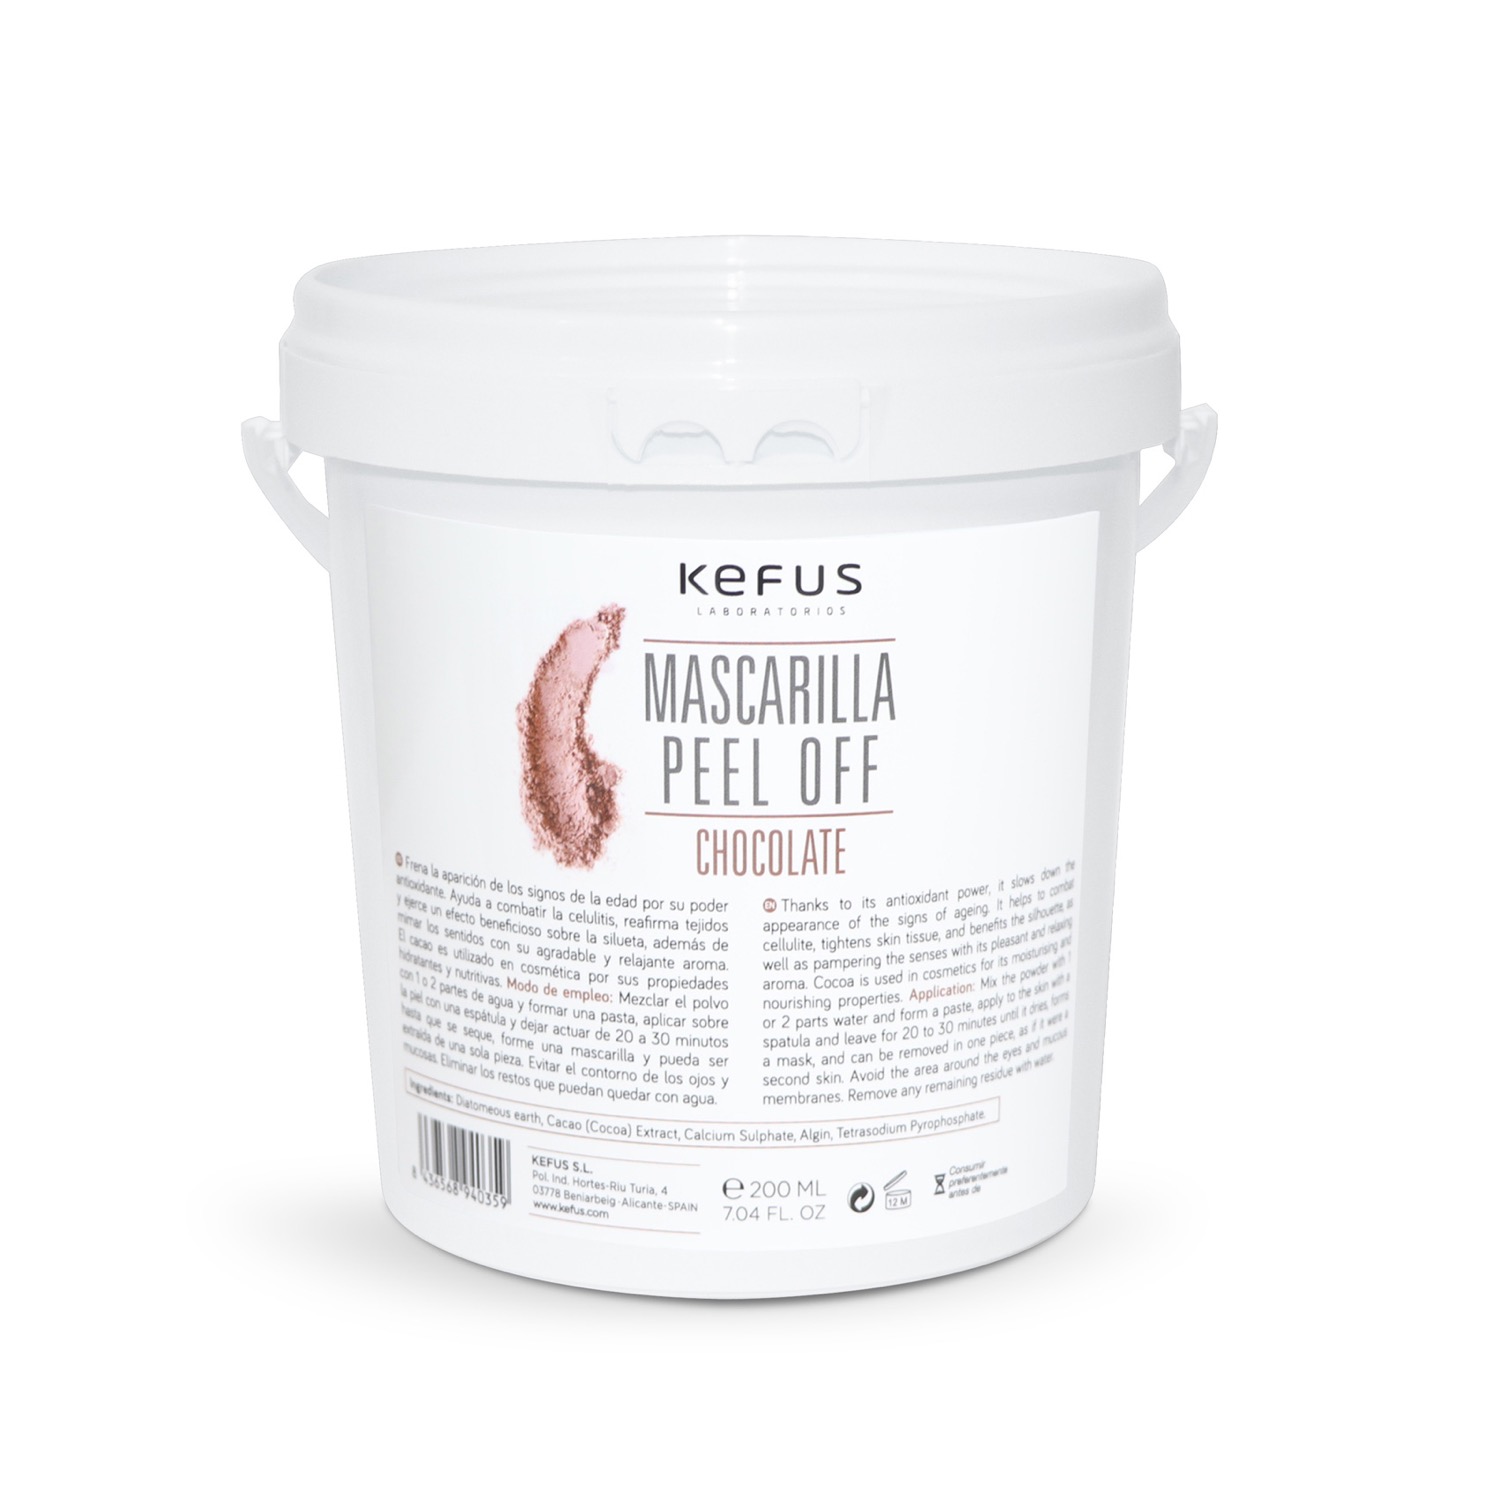 Mascarilla Peel Off Alginato Chocolate Kefus 200 g